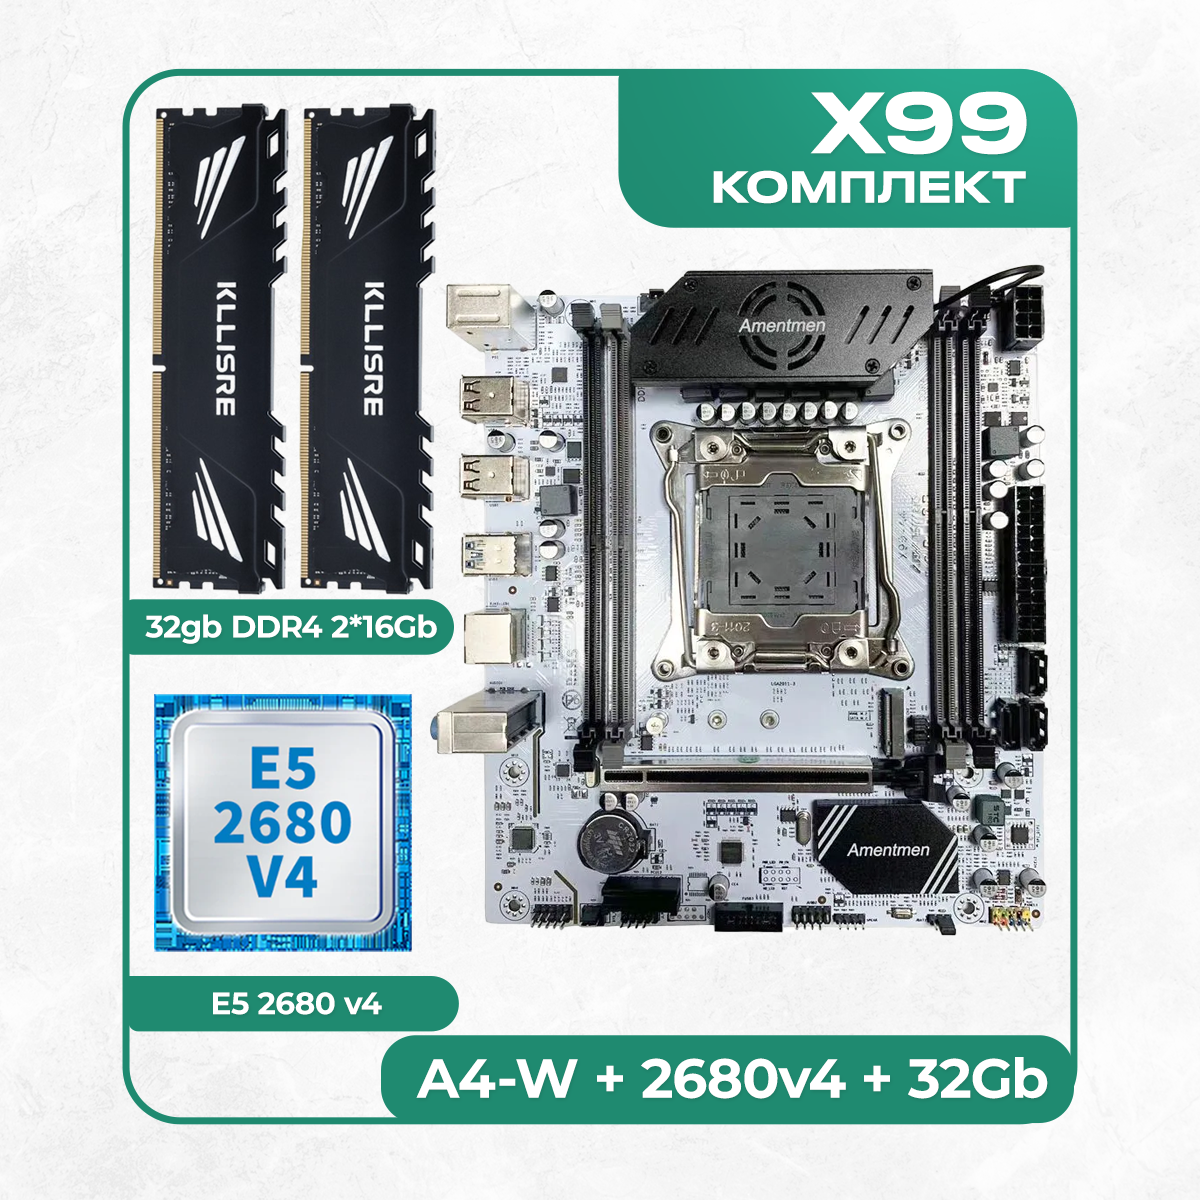 Комплект материнской платы X99: A4-W 2011v3 + Xeon E5 2680v4 + DDR4 Kllisre 2666Mhz 32Гб